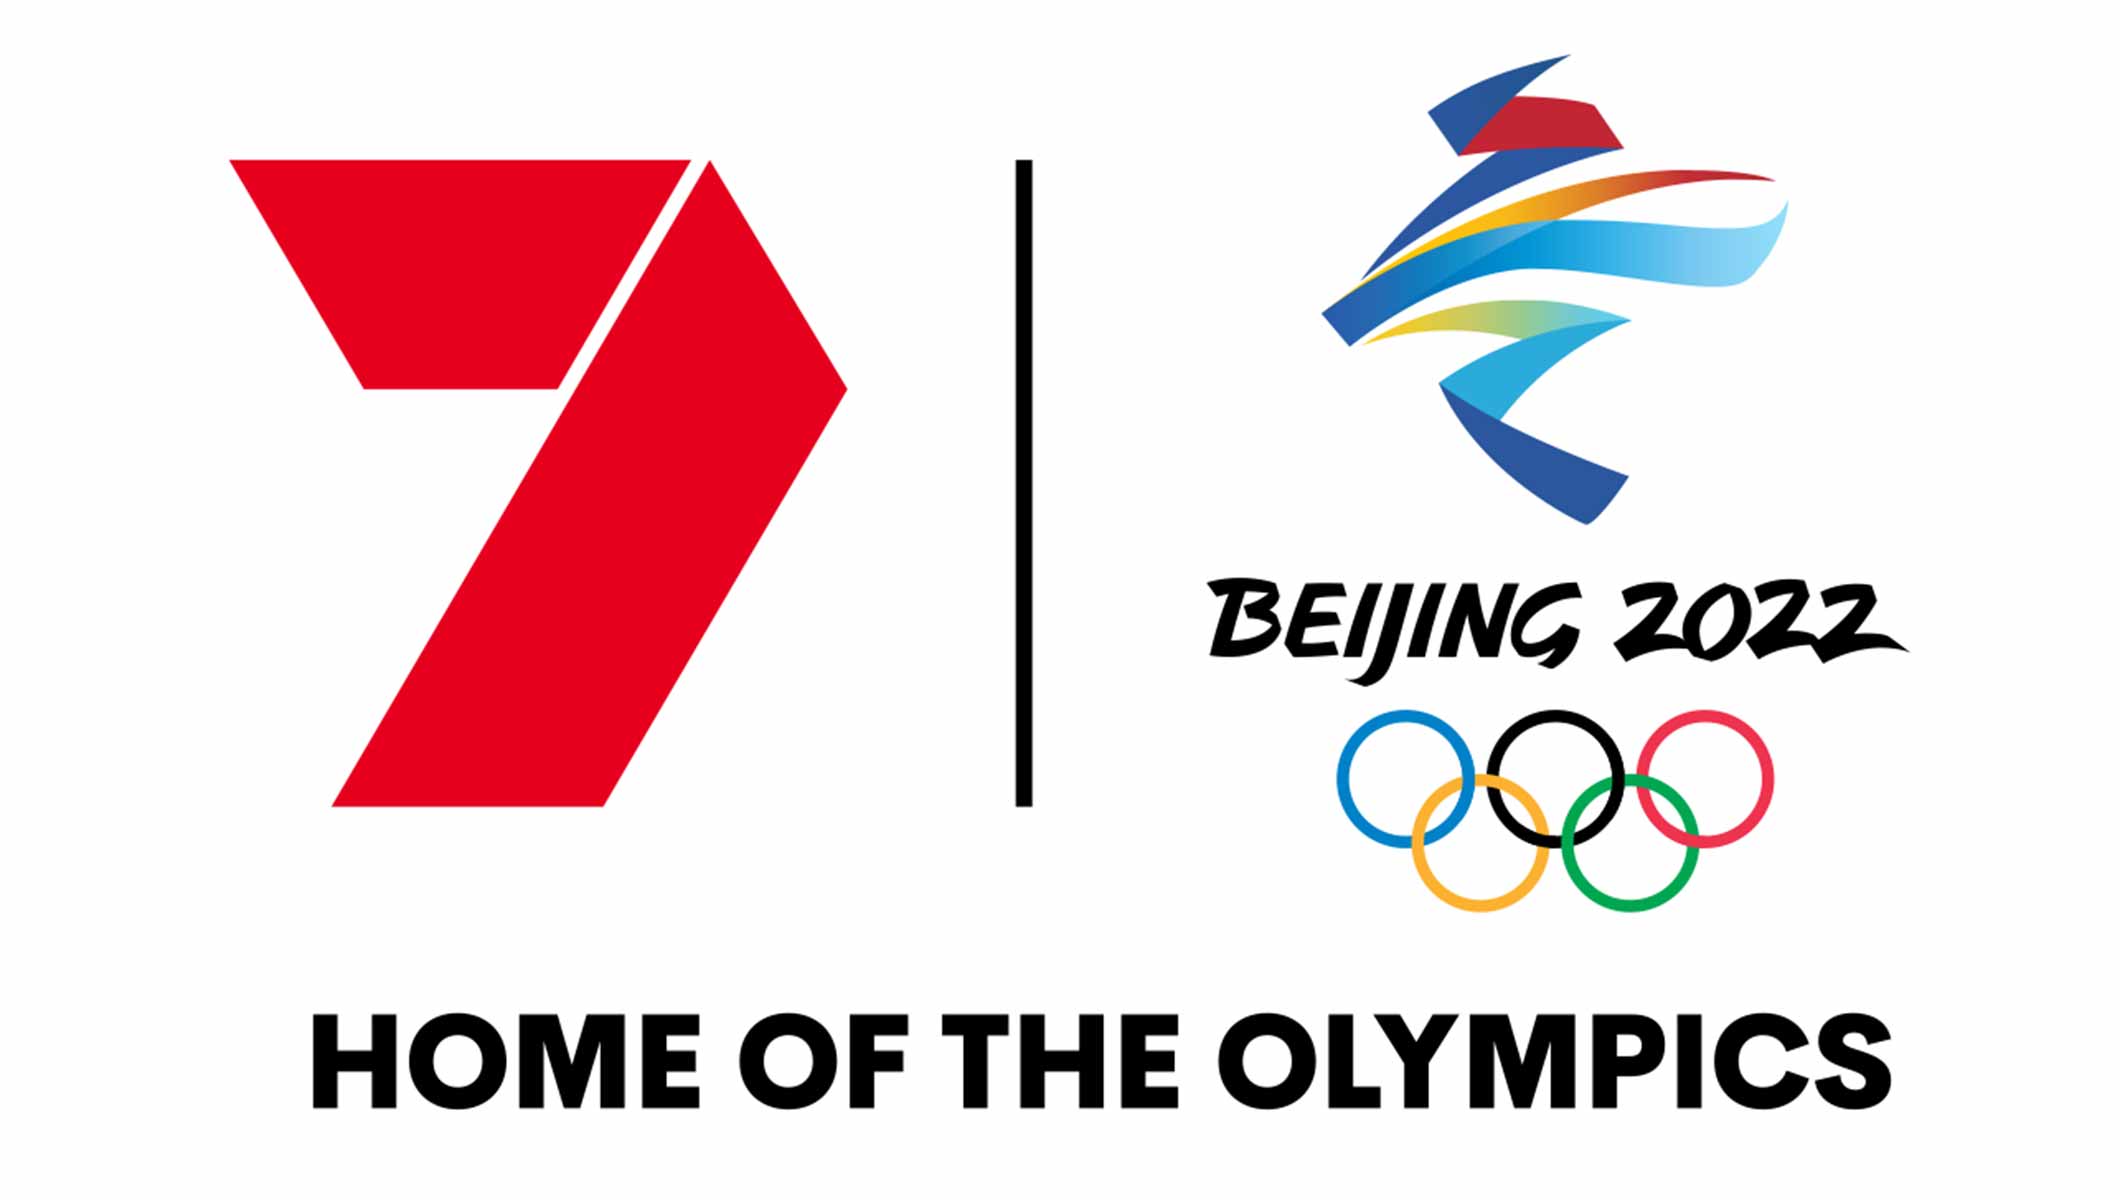 IOC Beijing 2022 broadcast rights in Australia - Olympic News